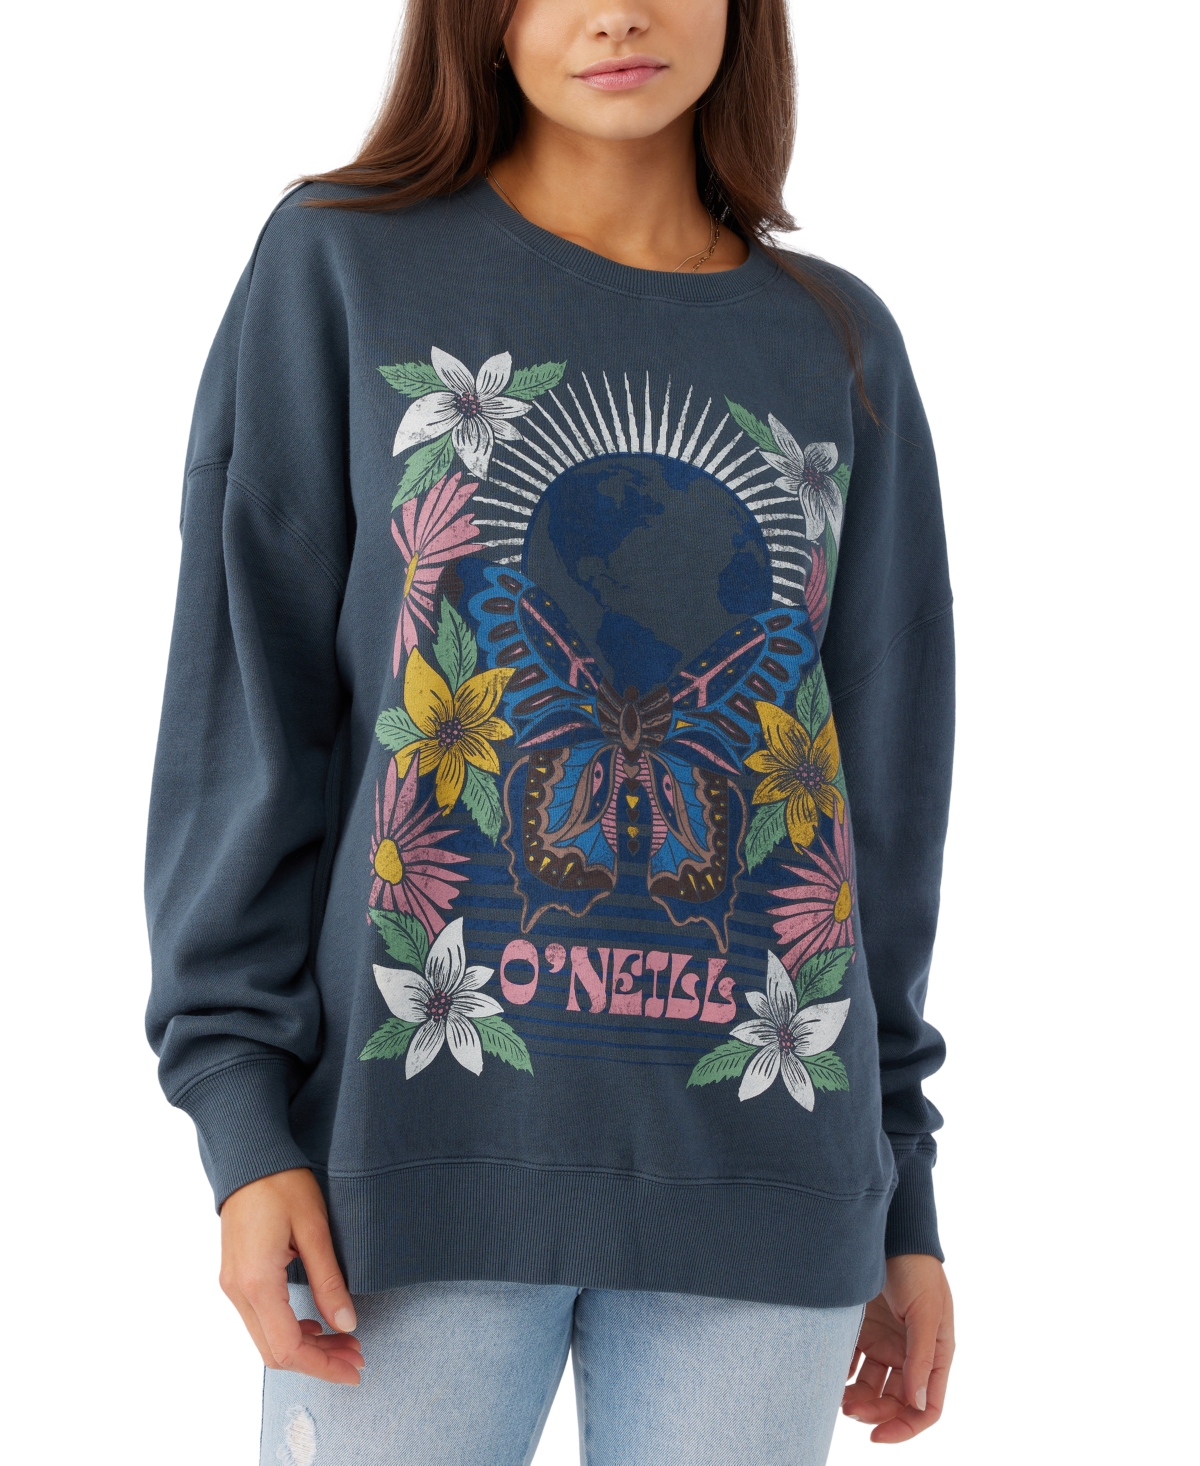 O'neill Juniors' Choice Graphic Sweatshirt, Created For Macy's In Slate